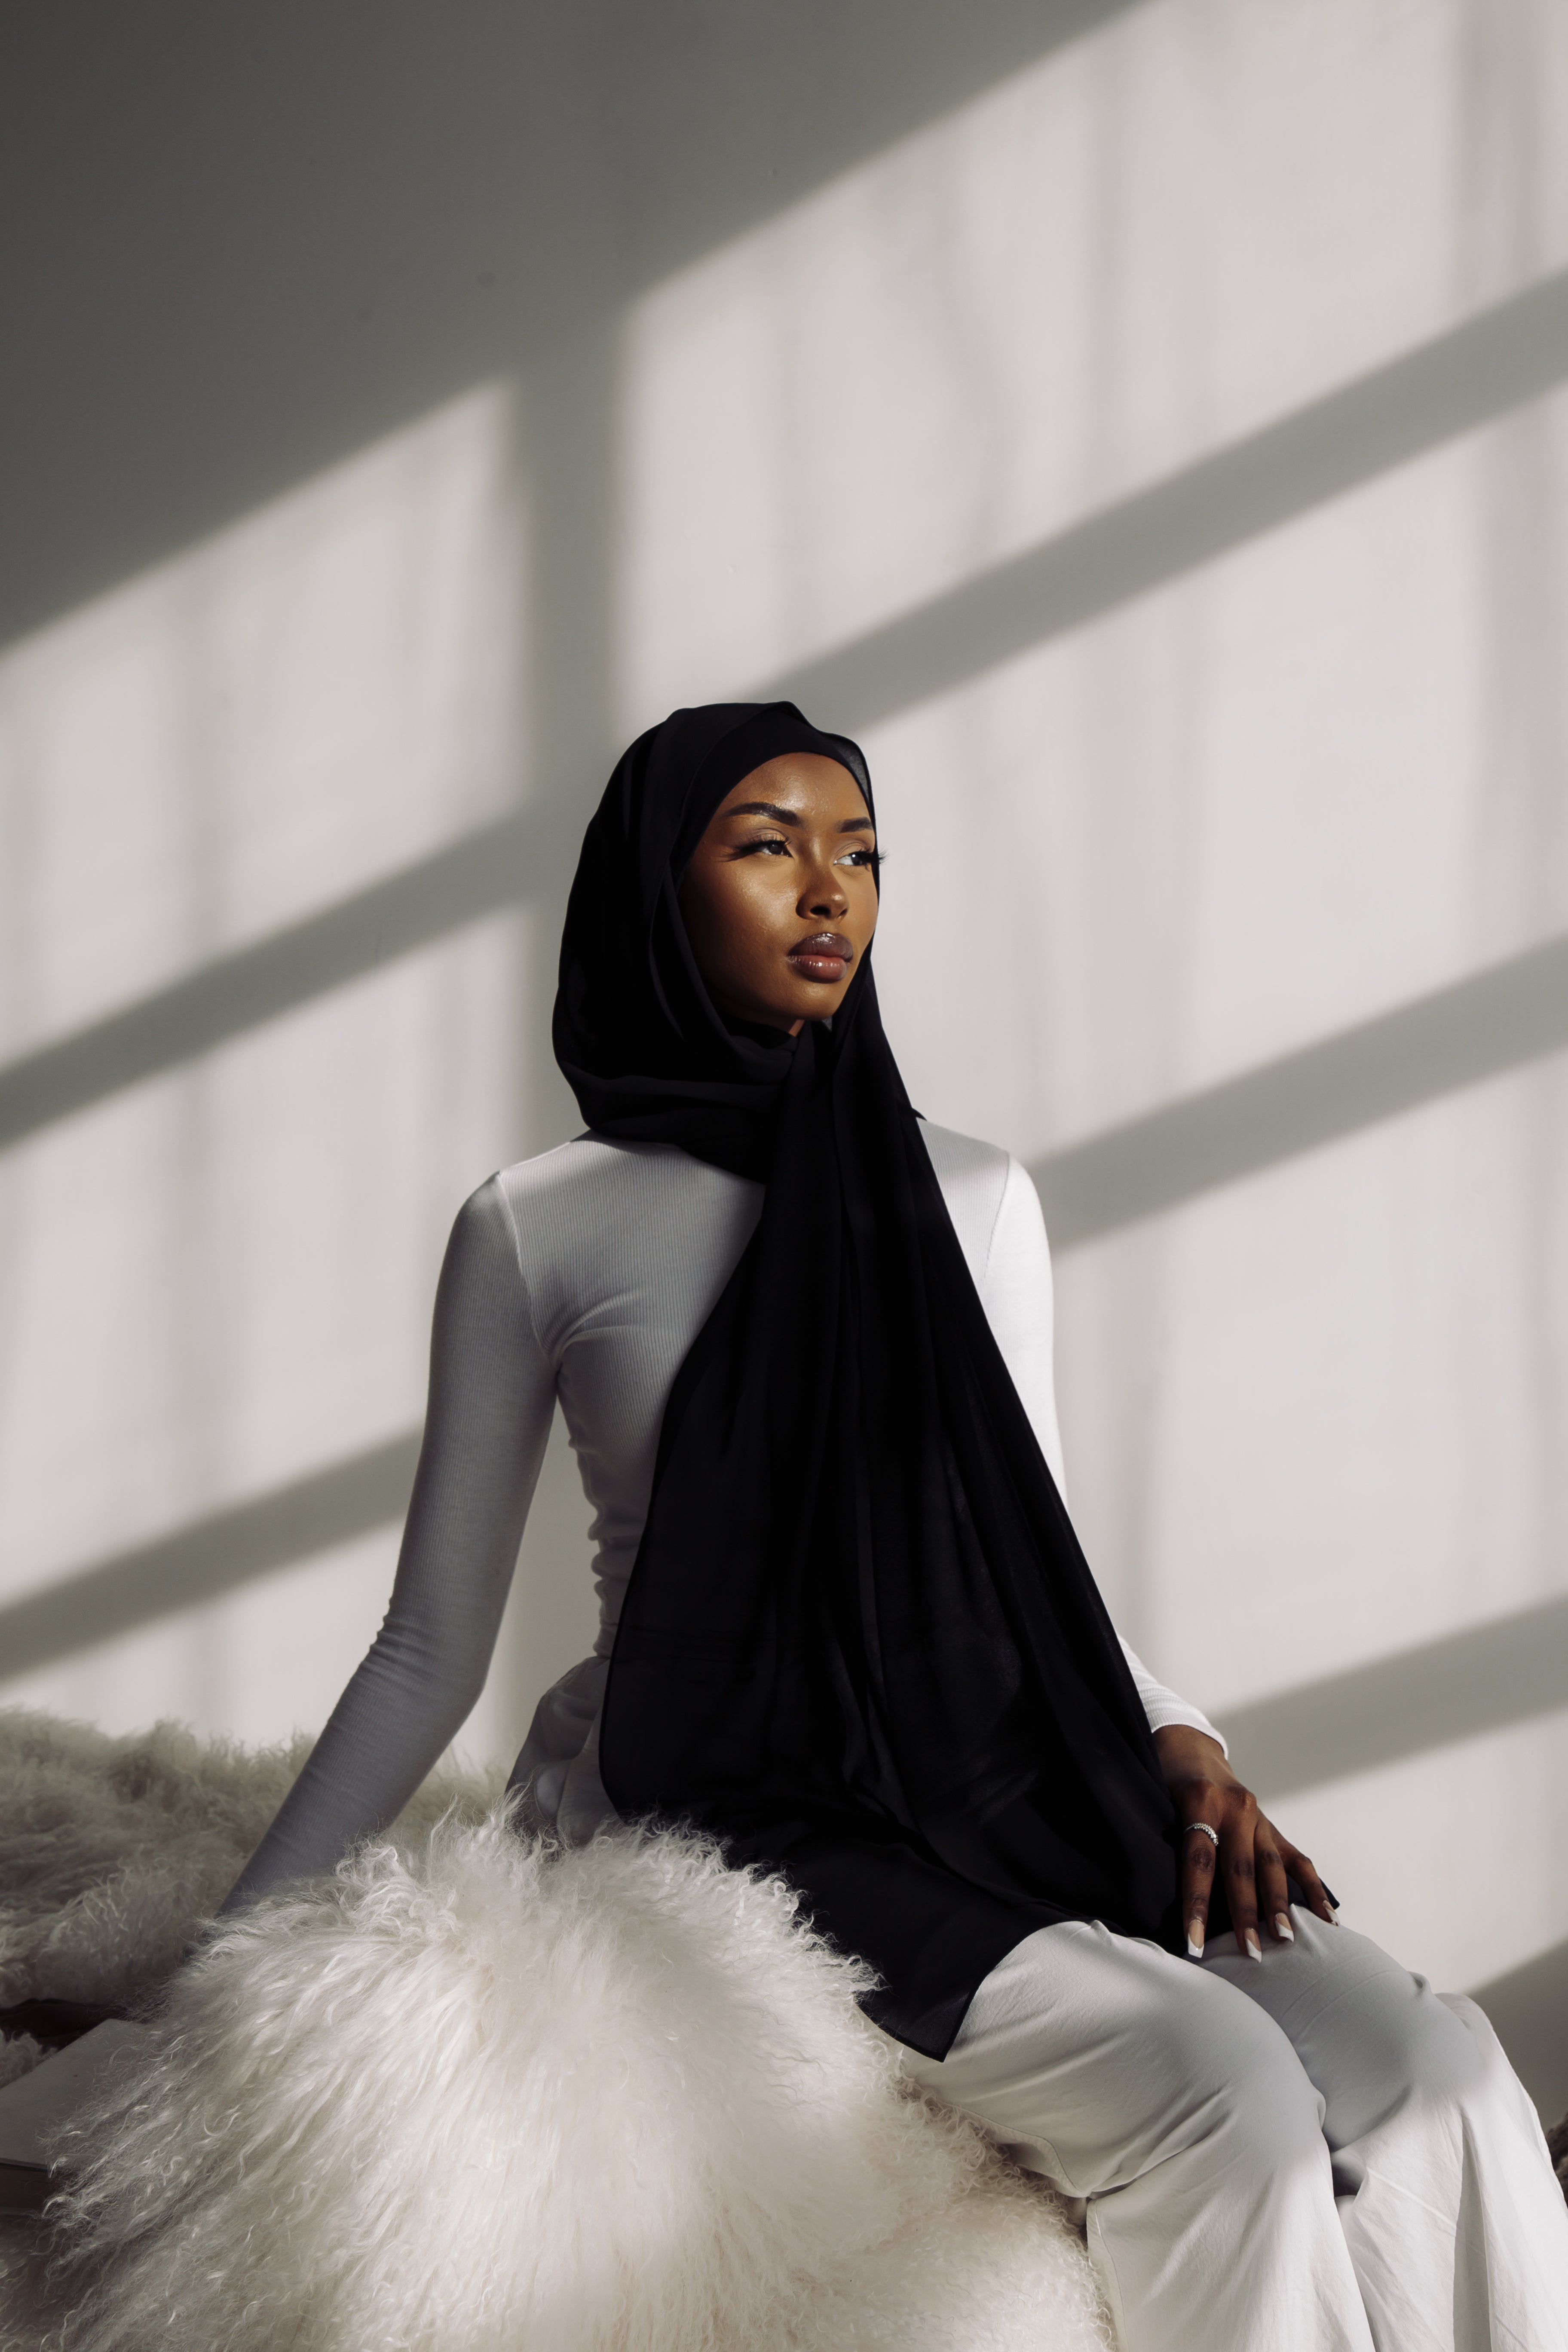 Matching Hijab & Undercap Set - Shell